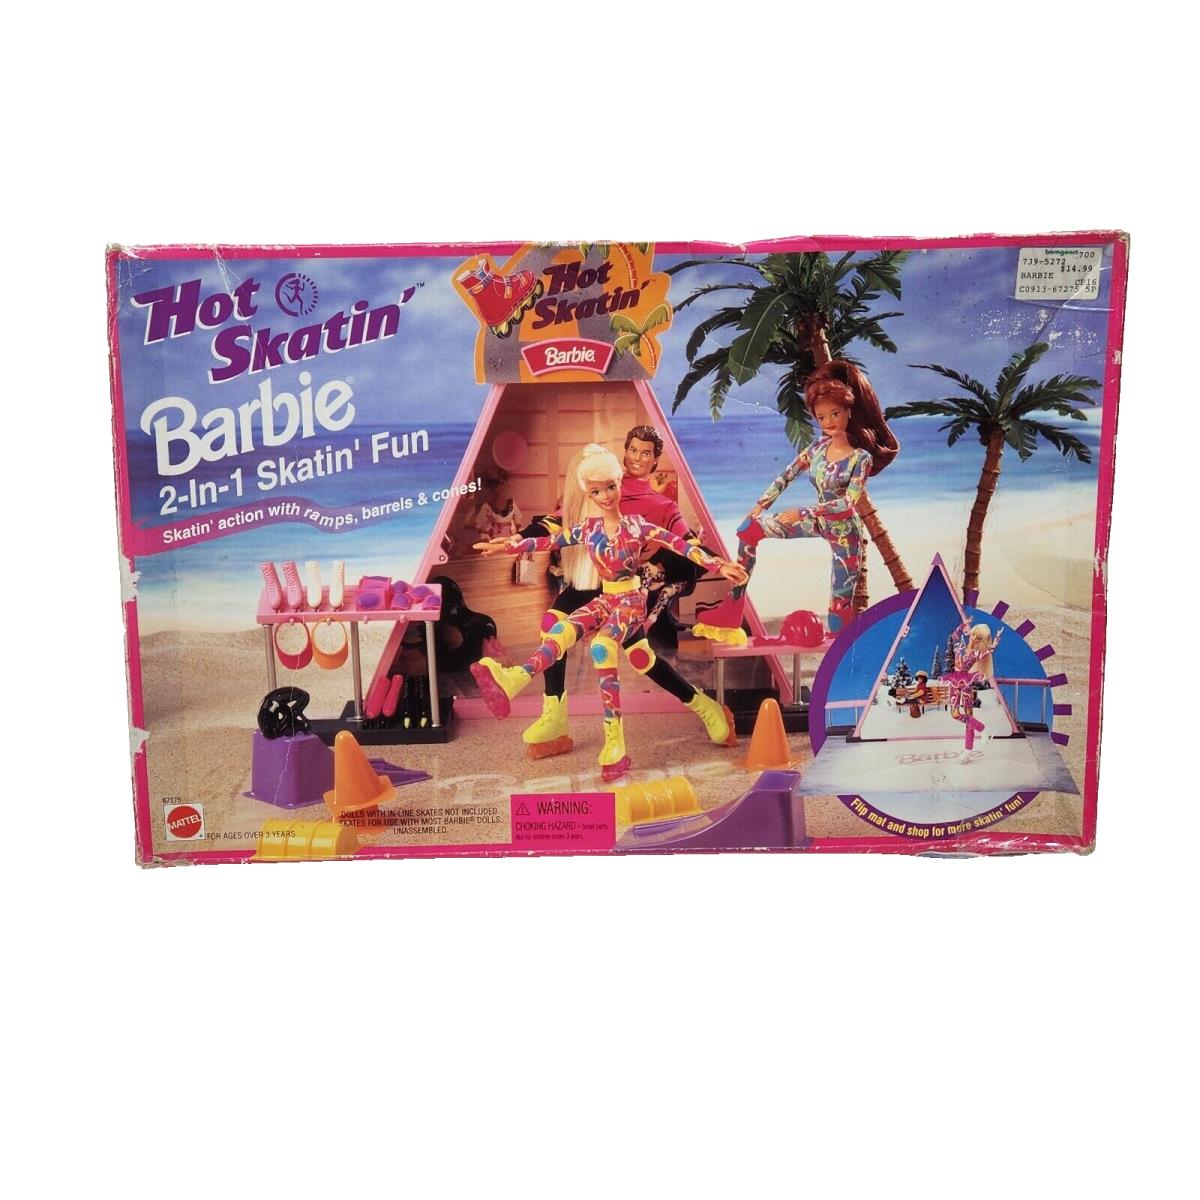 Vintage 1995 Hot Skatin Barbie 2 IN 1 Rollerblade Fun Complete Box 67275